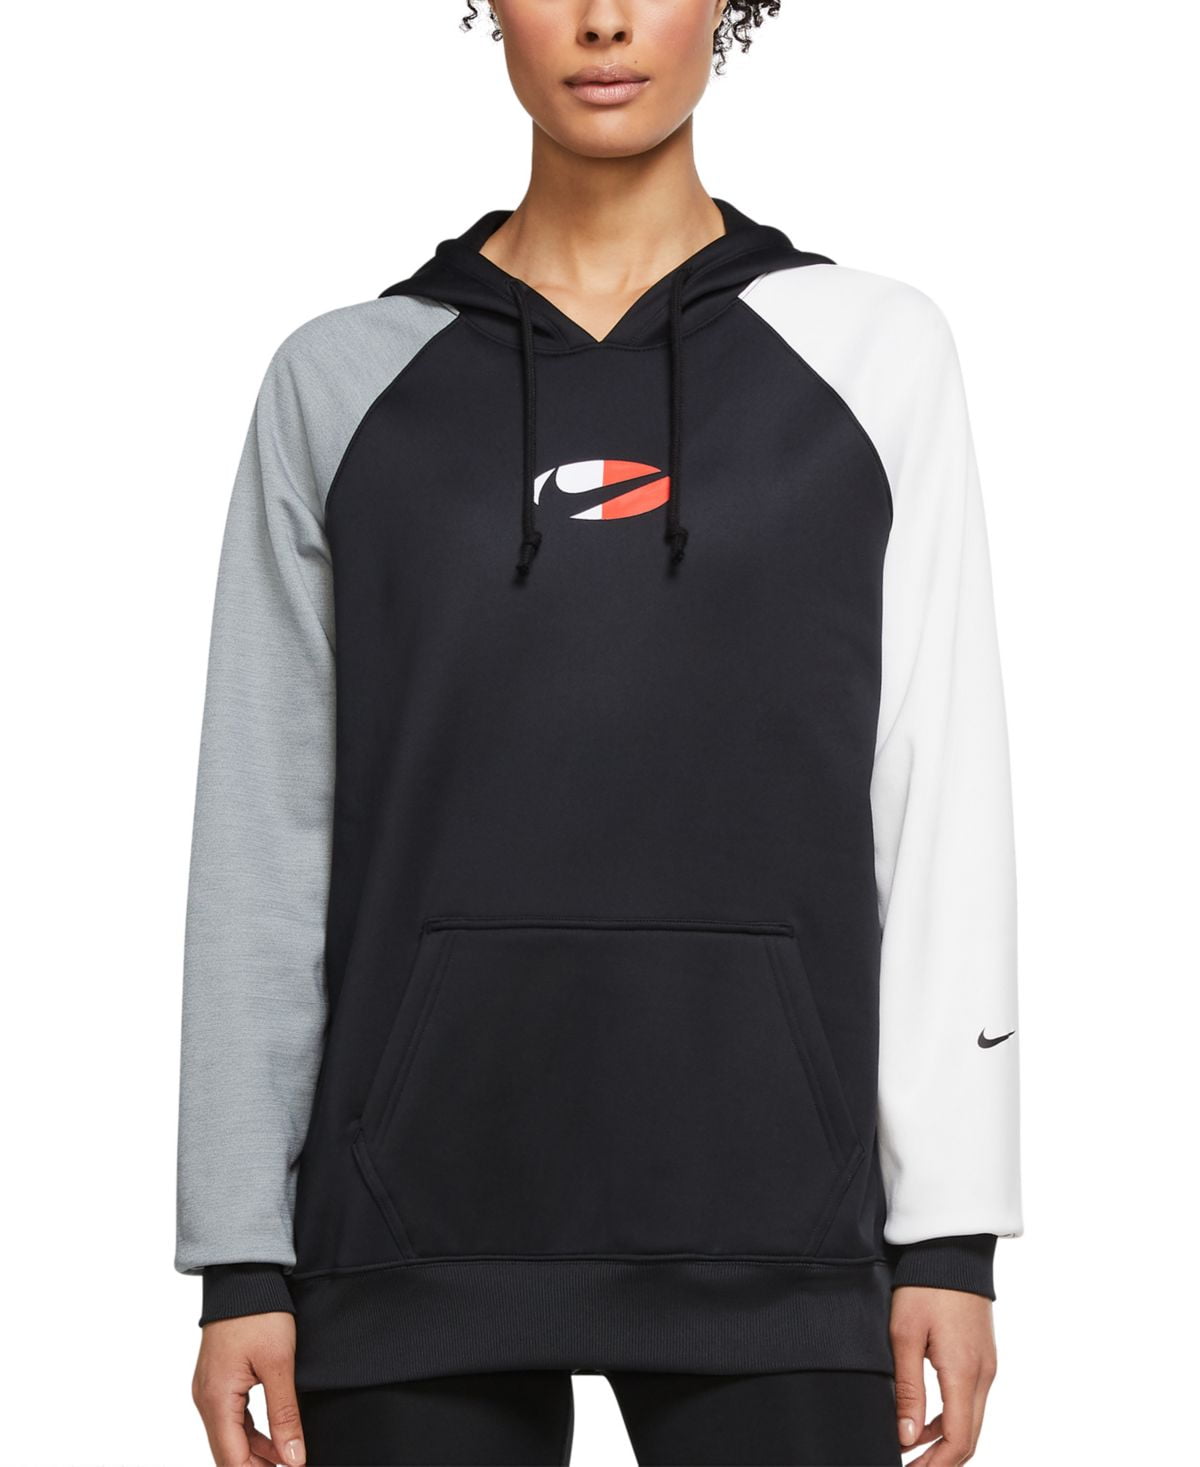 Nike Womens fit Size Fleece Color Block Training Hoodie,Black,1X Walmart.com